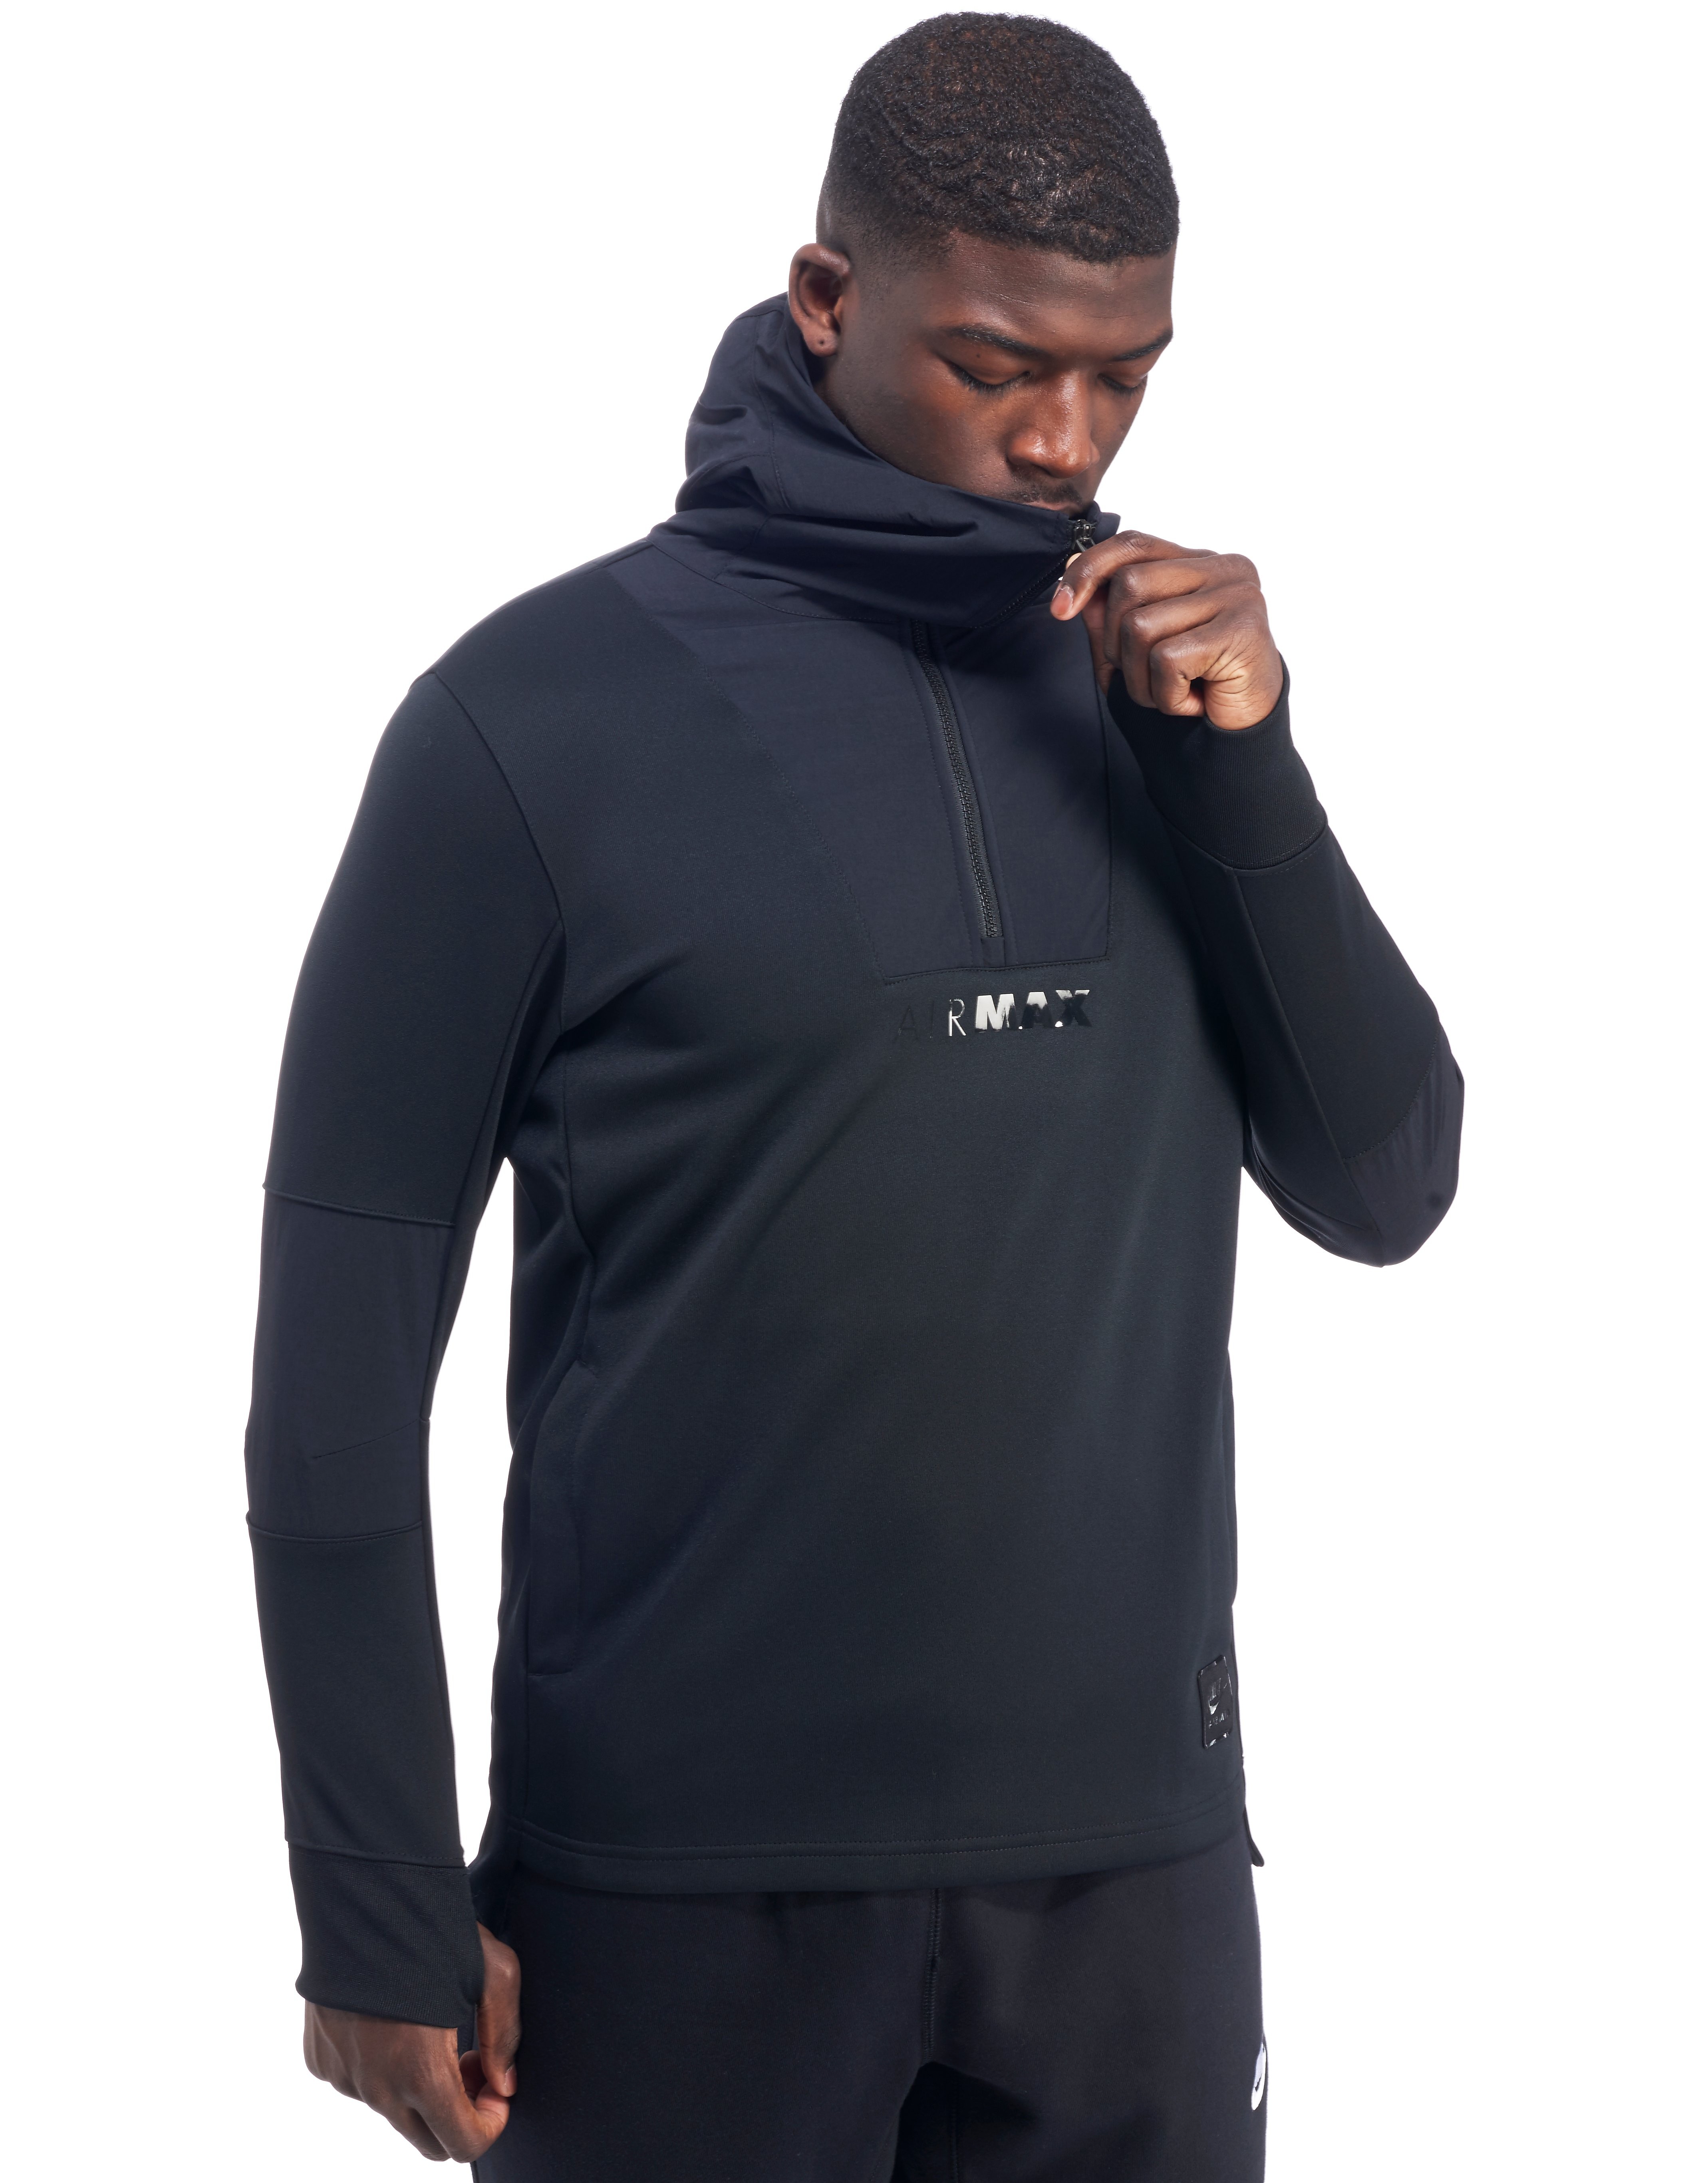 Nike Air Max Half Zip Hoody - Black - Mens - Sports King Store